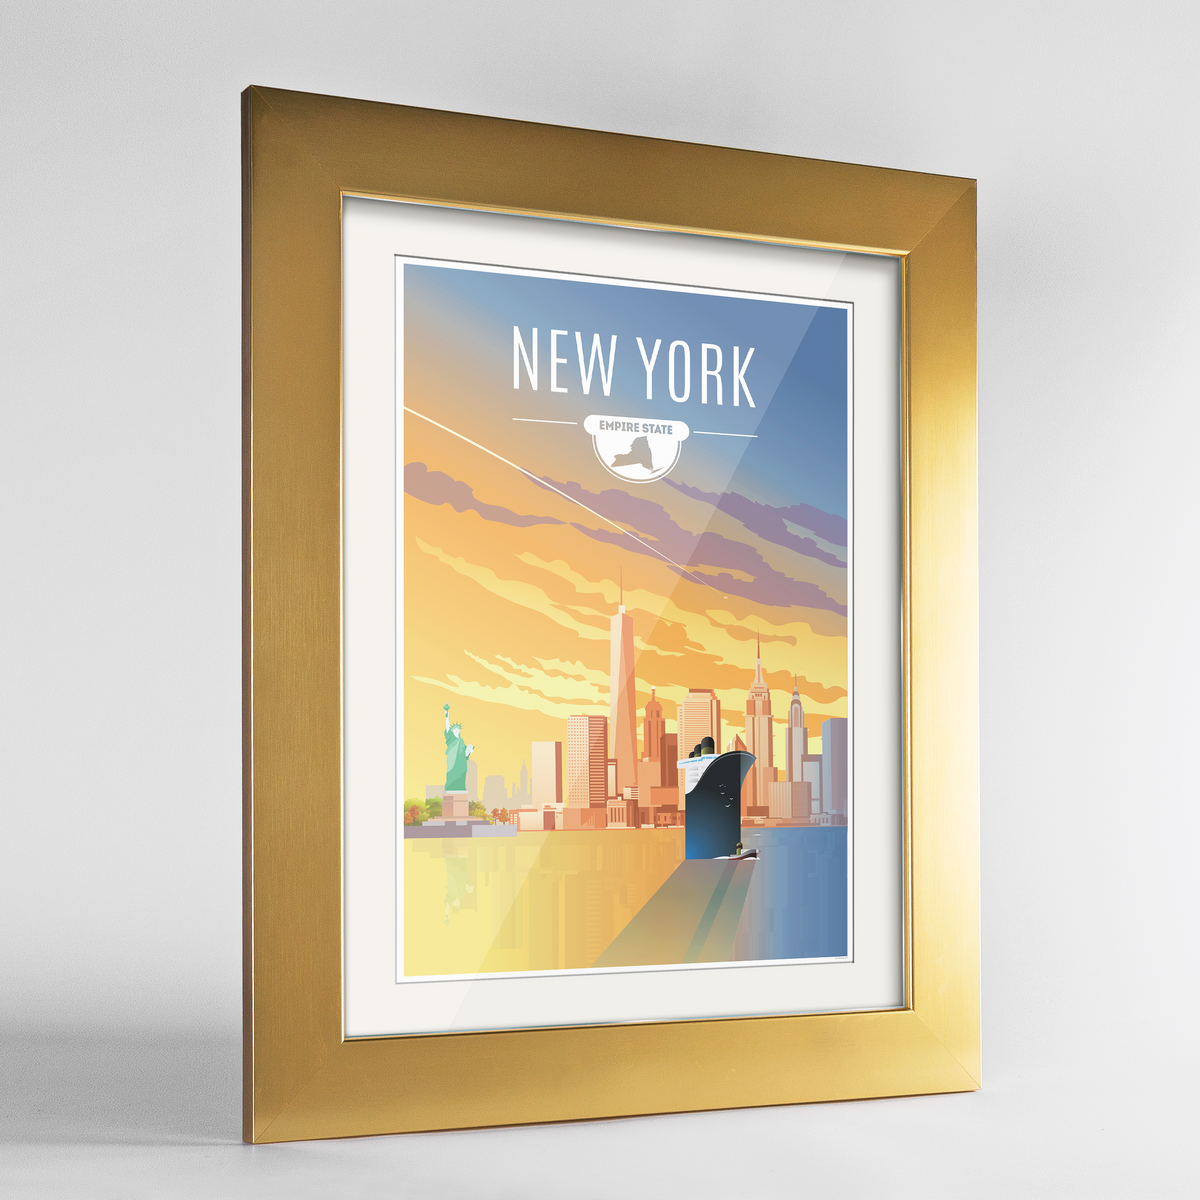 New York State Frame Print